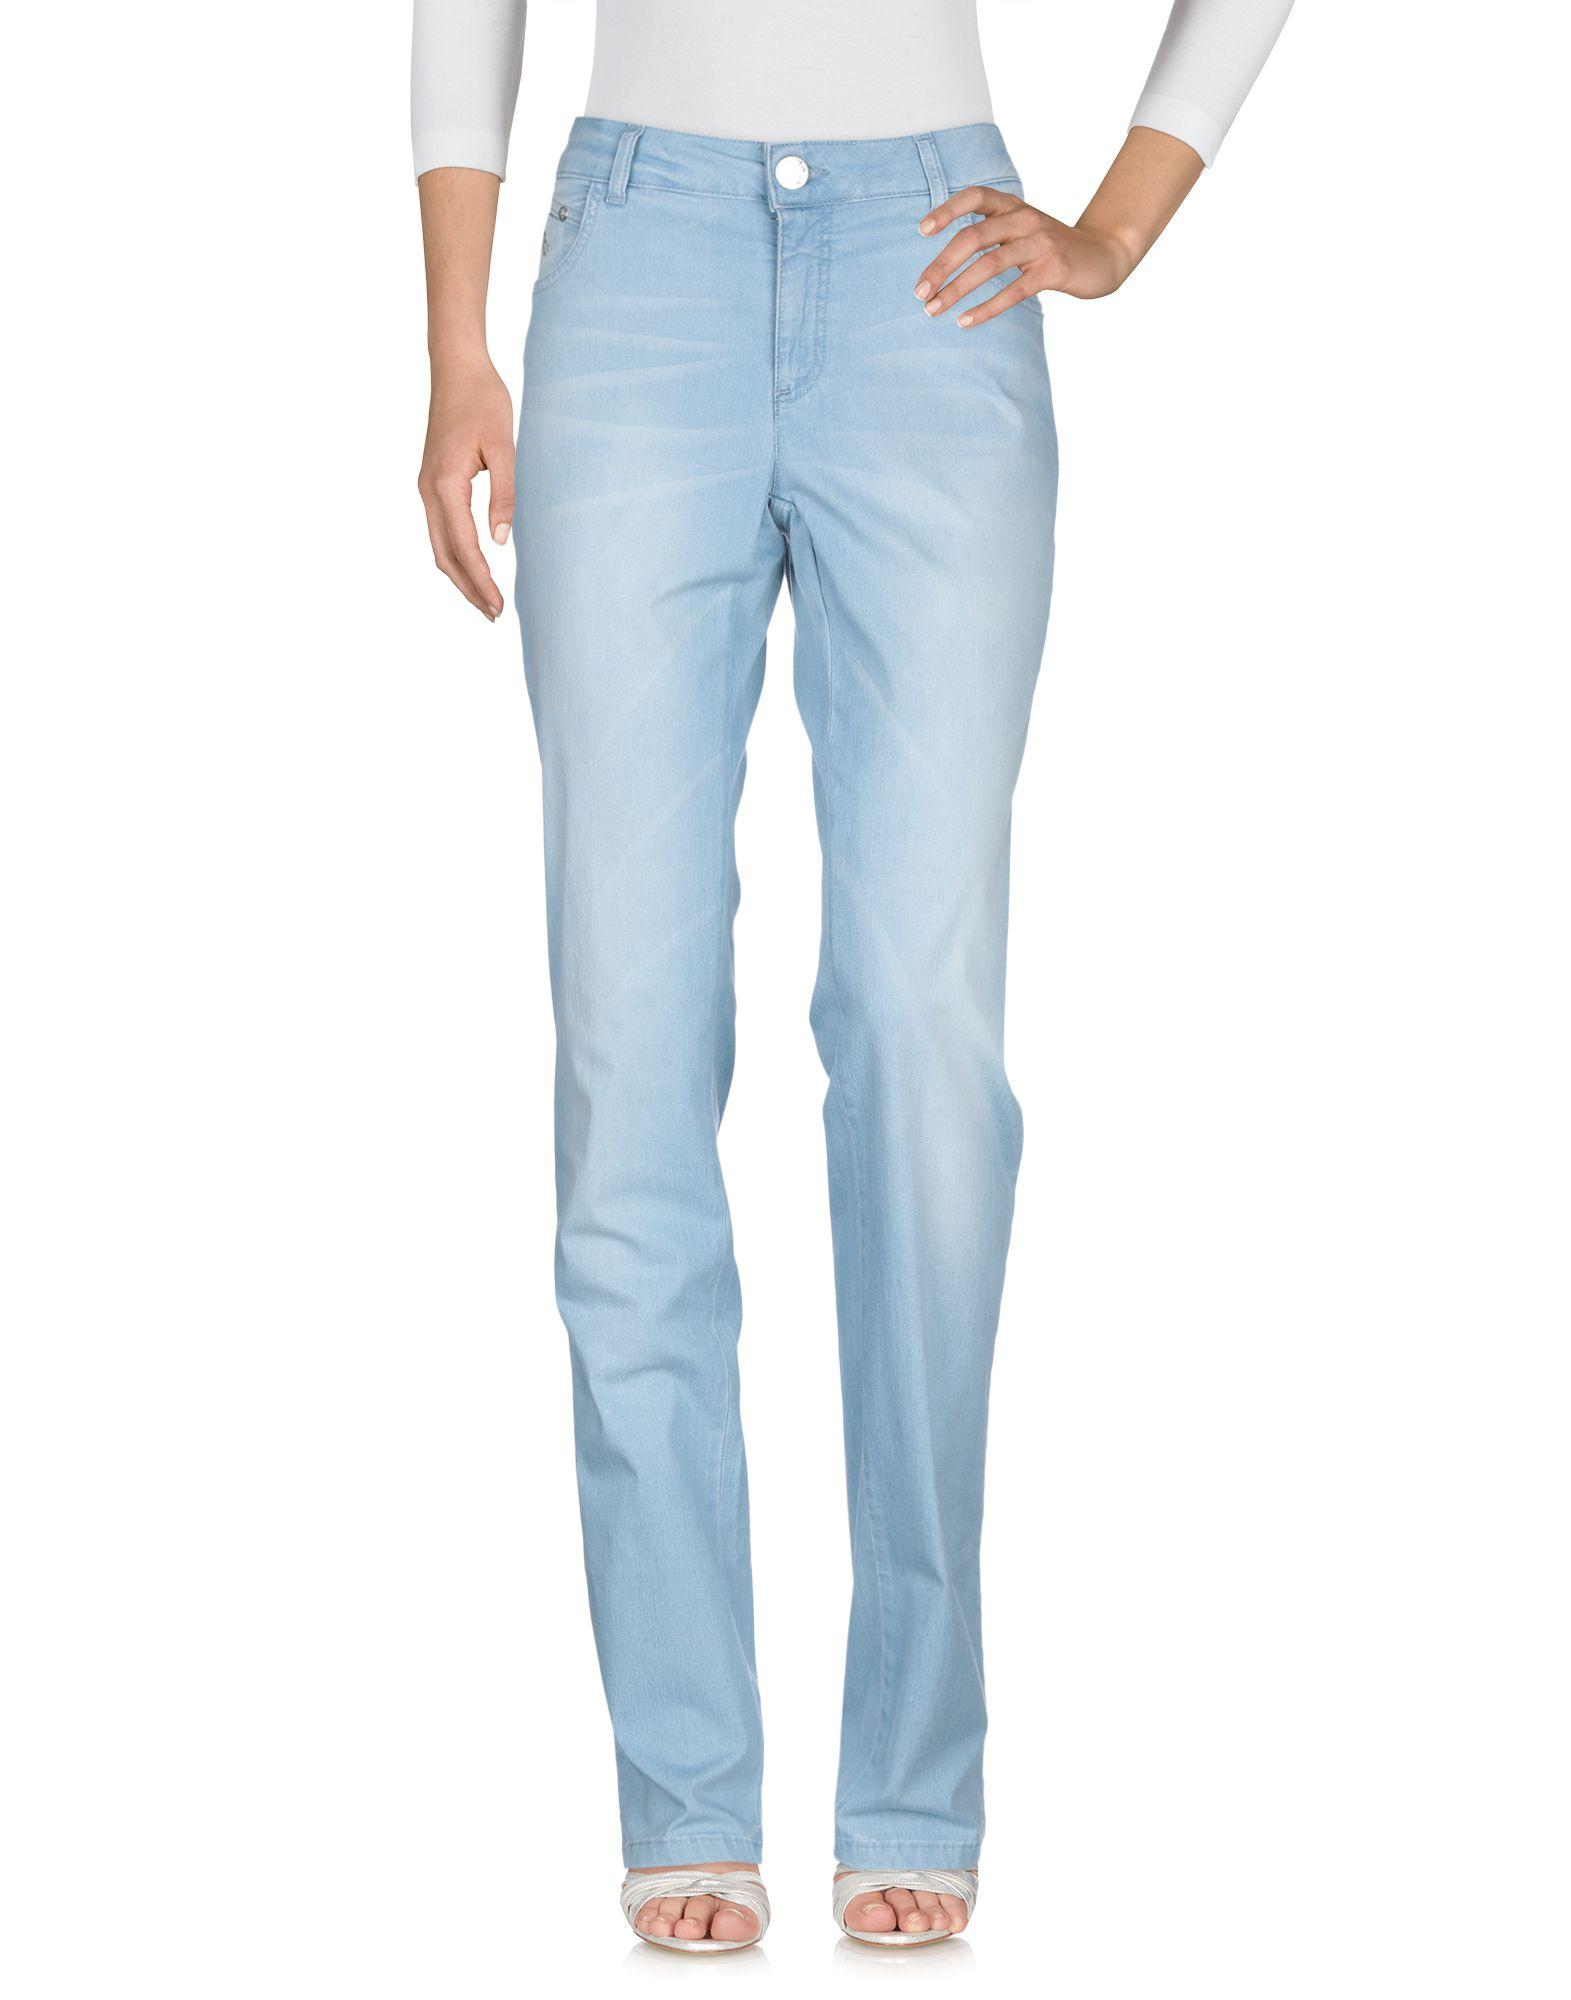 Marani Jeans Denim Trousers in Blue - Lyst